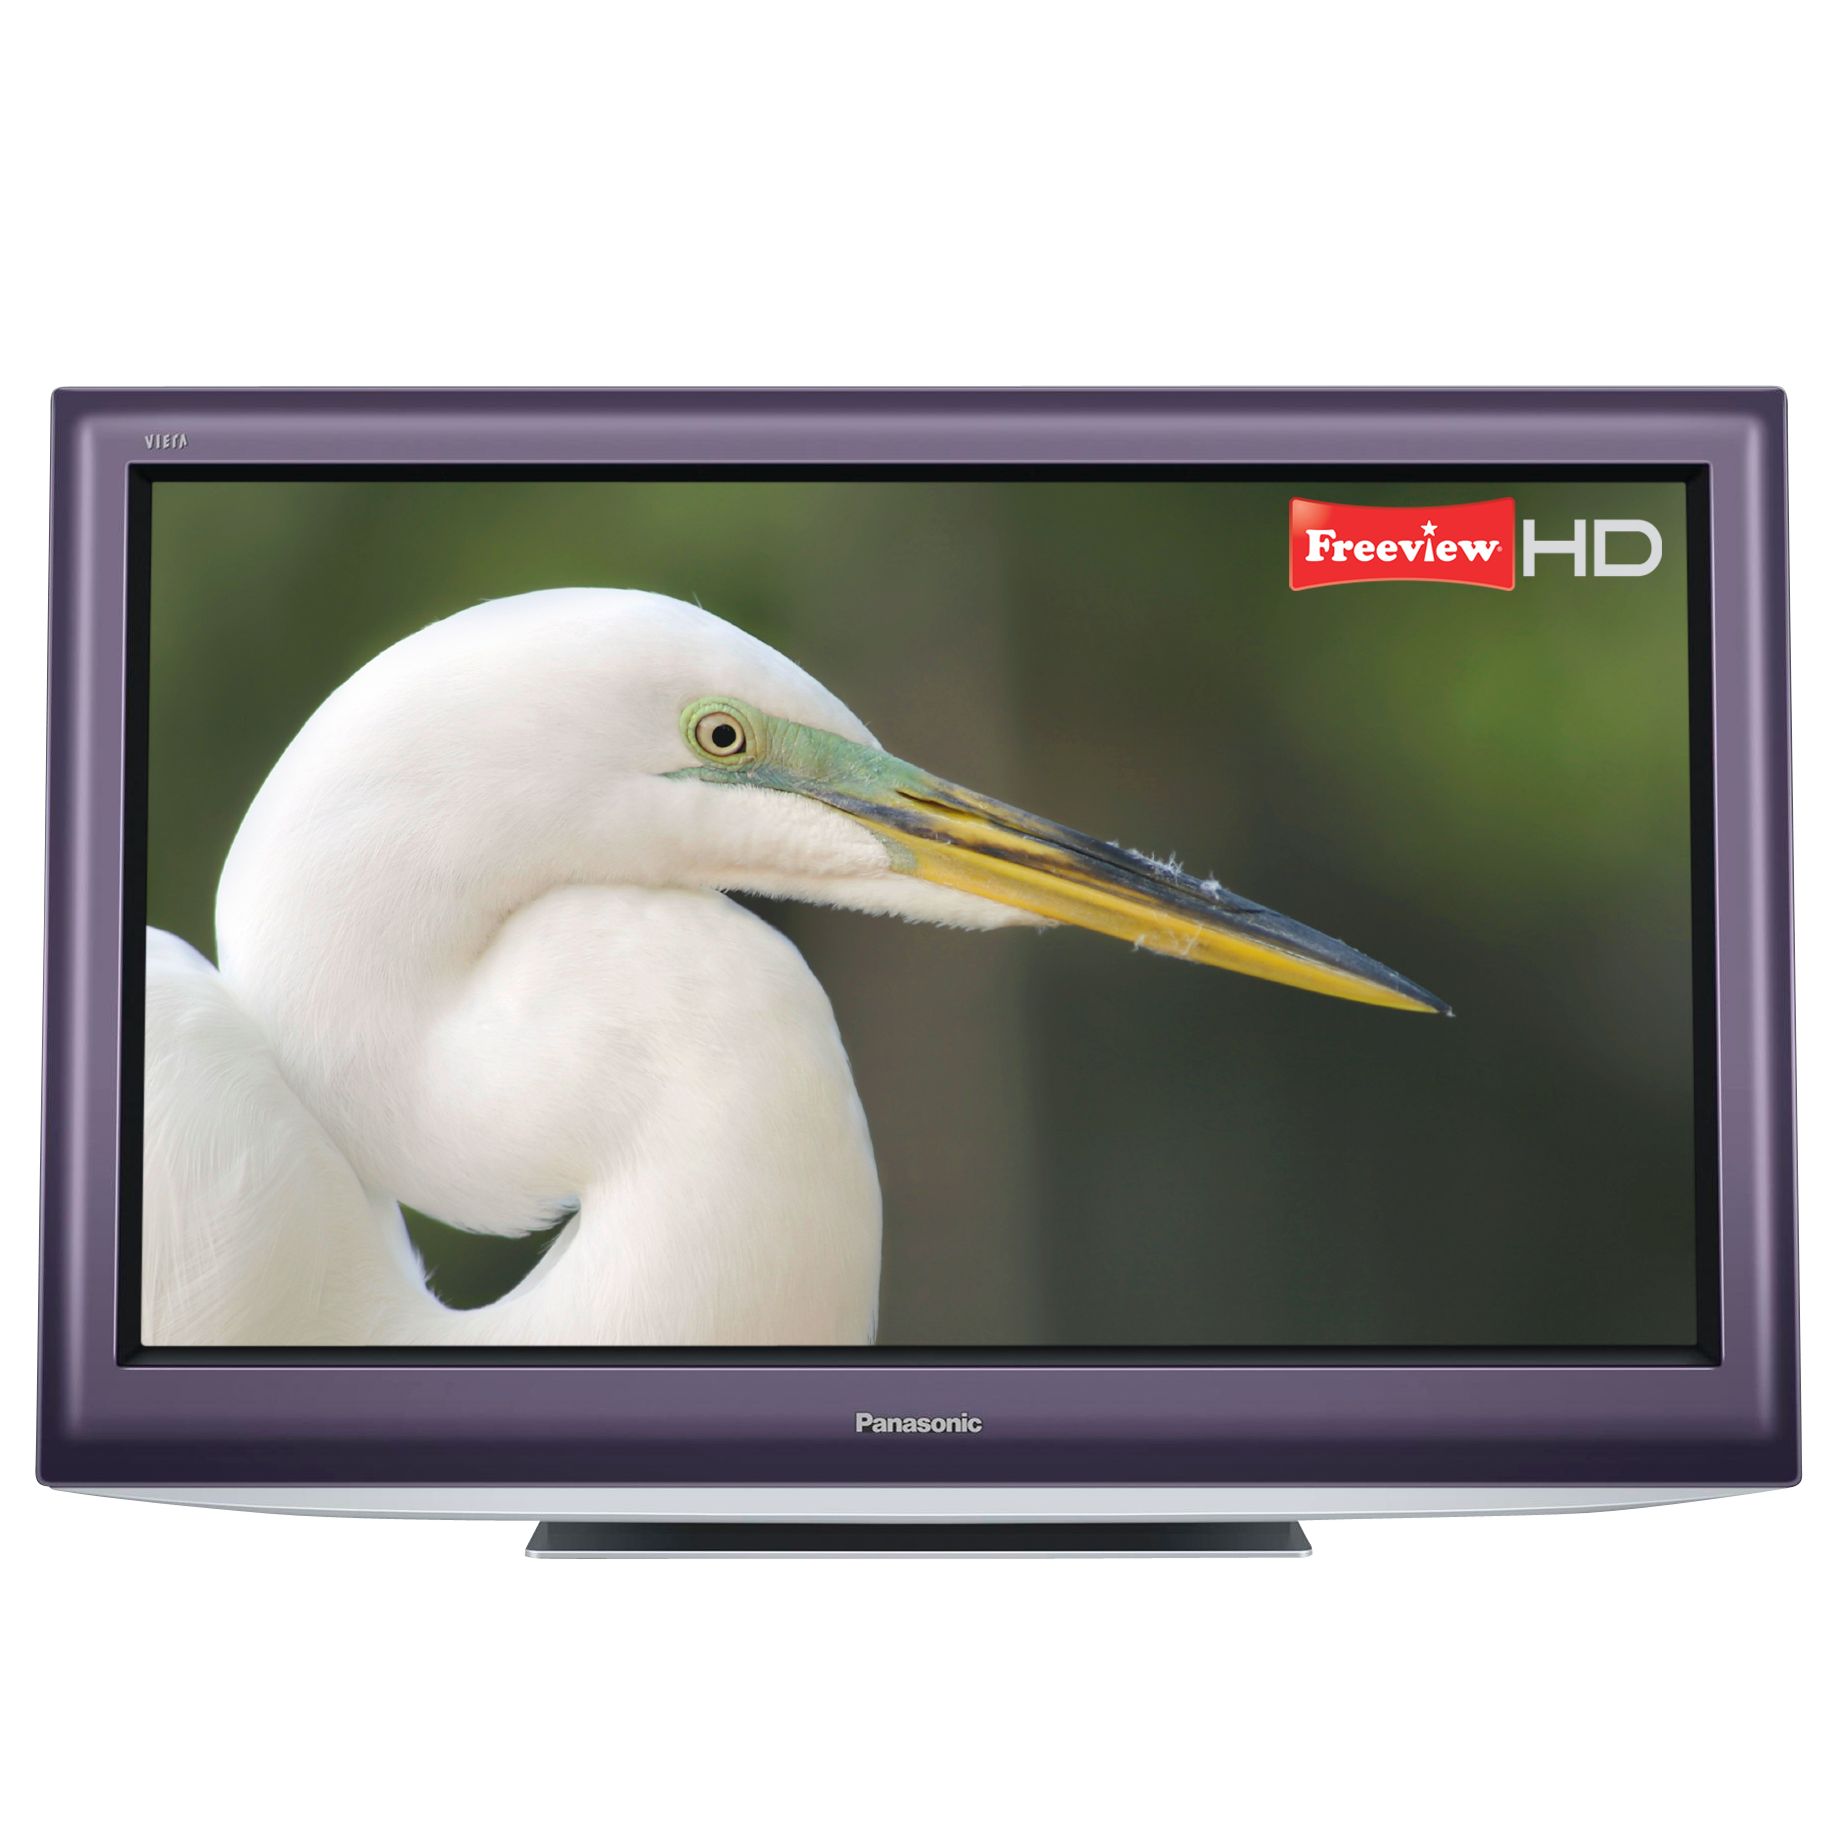 Panasonic Viera TX-L32D28BP LCD/LED HD 1080p TV, 32" with Built-in freesat & Freeview HD, Purple at John Lewis